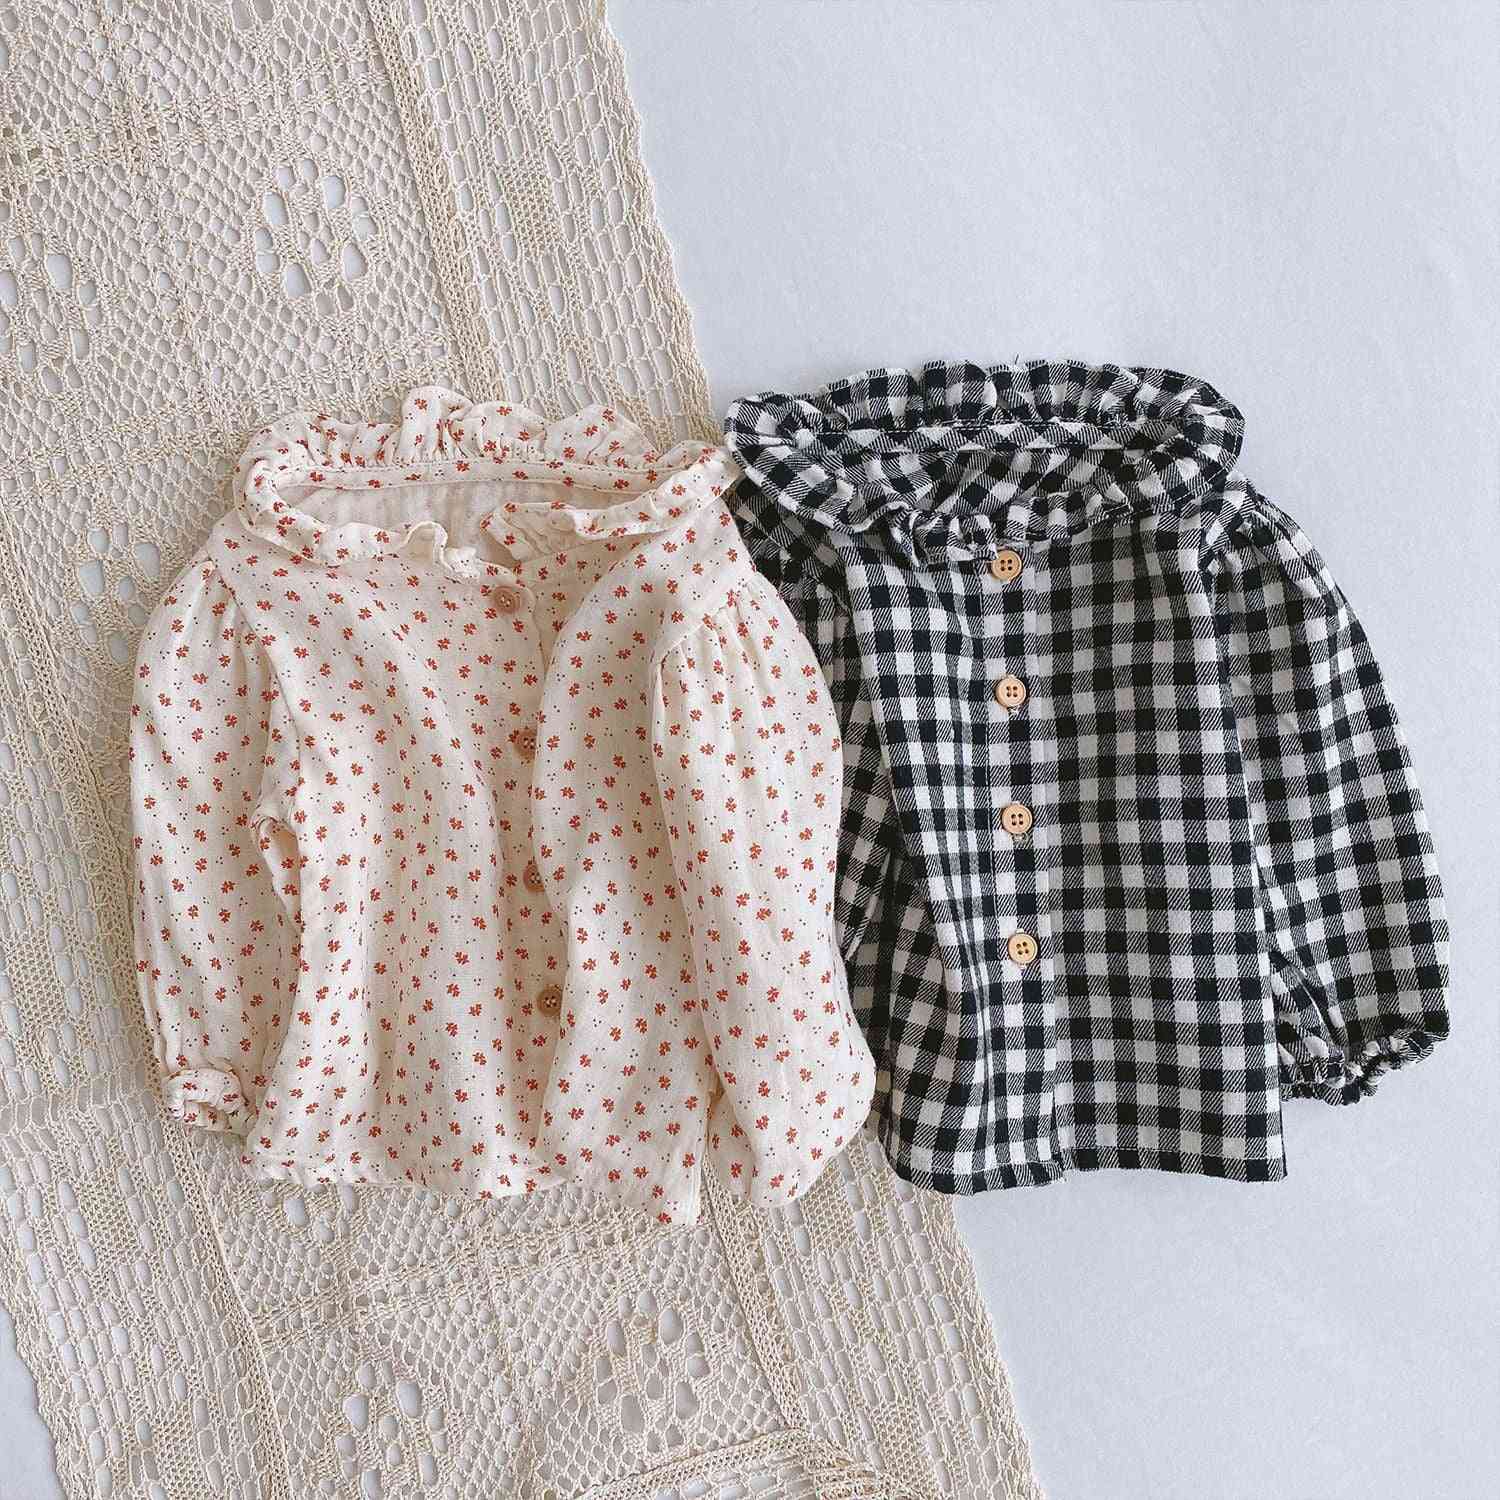 Autumn Infant Pure Cotton Floral Long Sleeve Casual Plaid Shirt / Tops Clothes